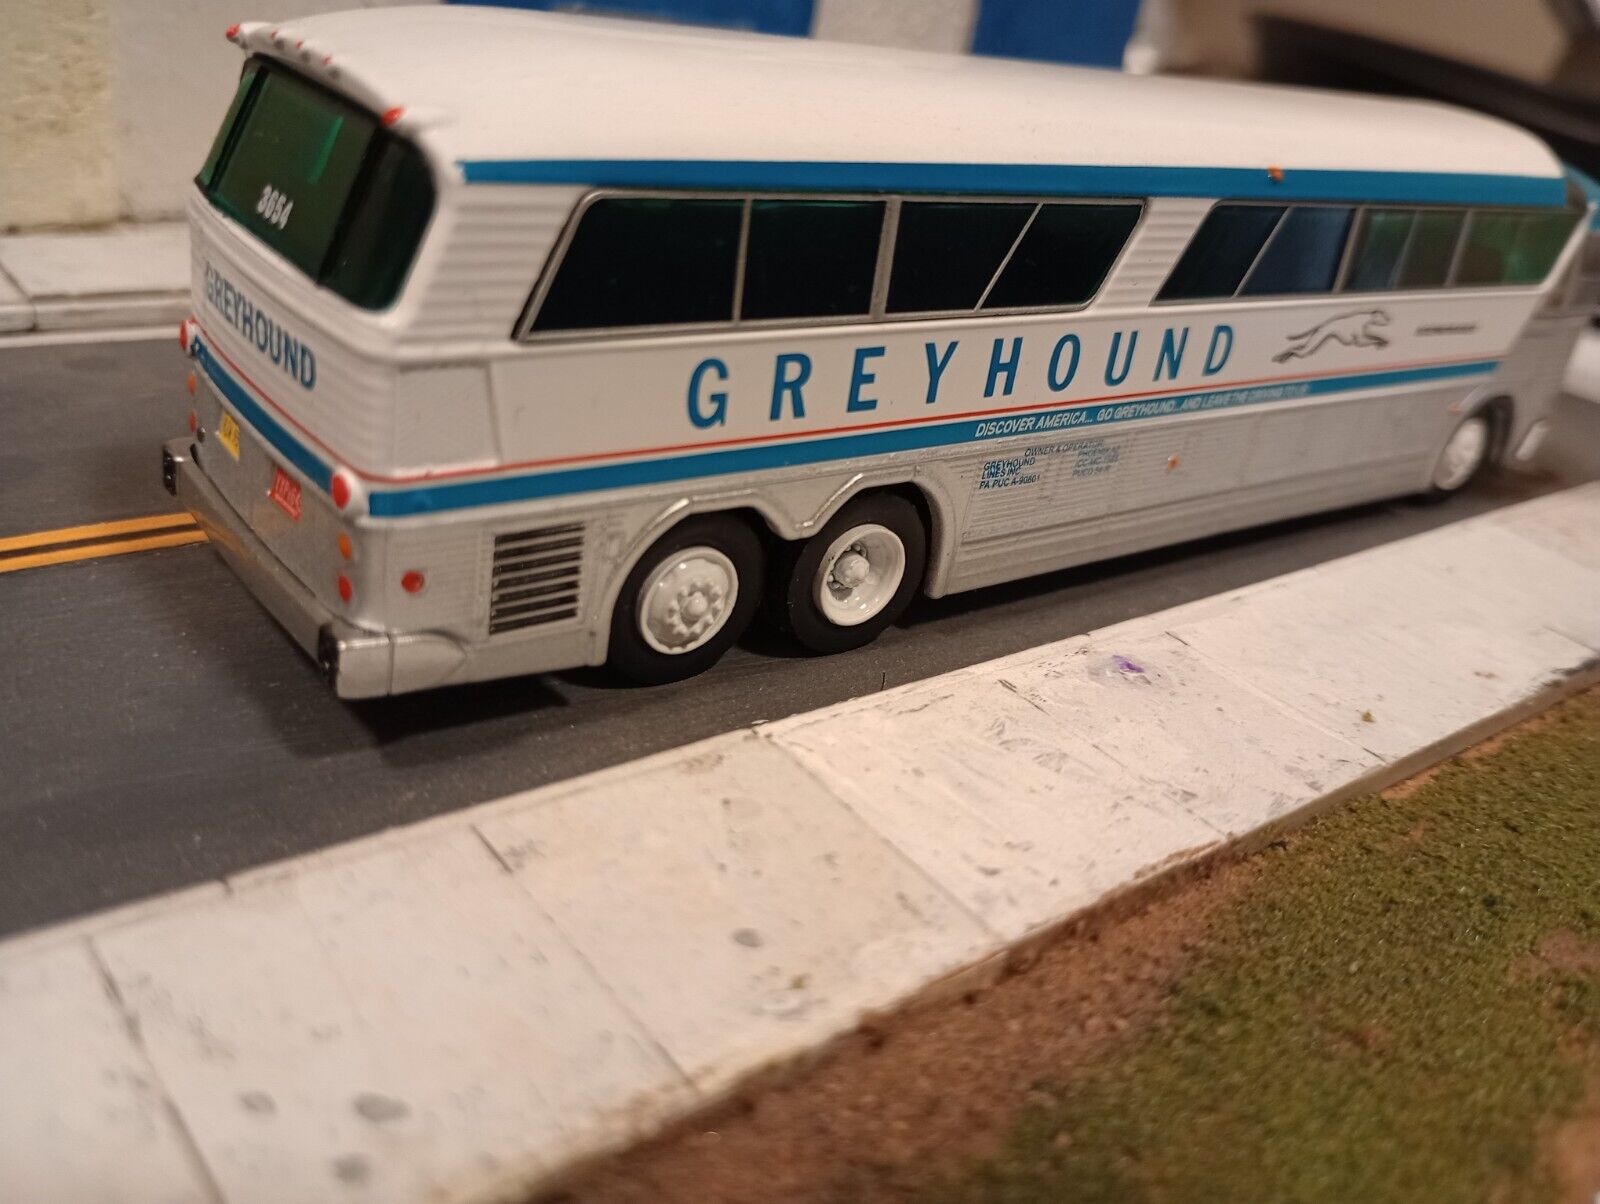 1:87 Scale Greyhound Bus